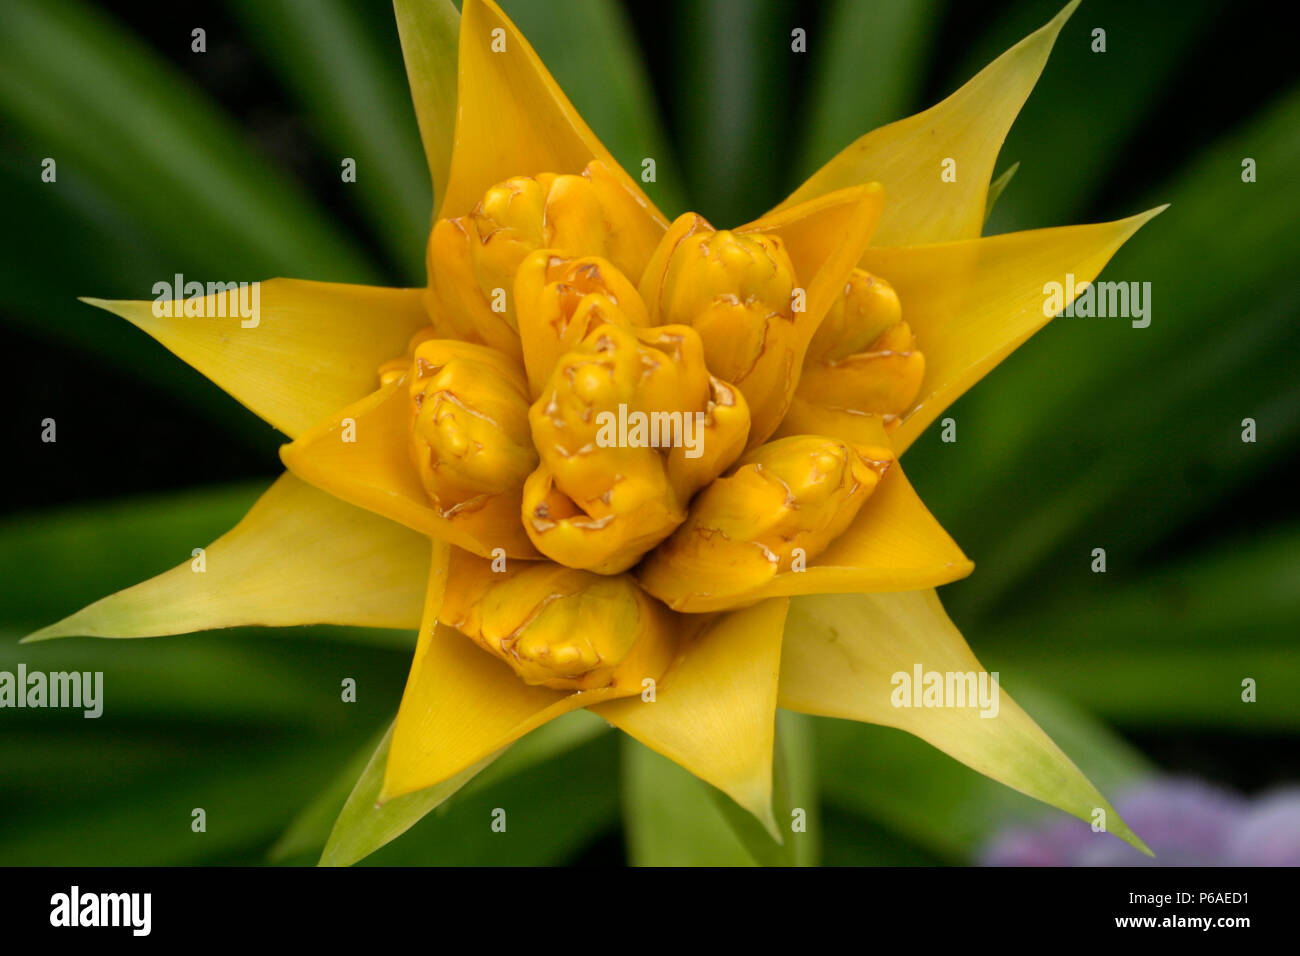 Close up of yellow Guzmania/ Bromeliad flower Stock Photo